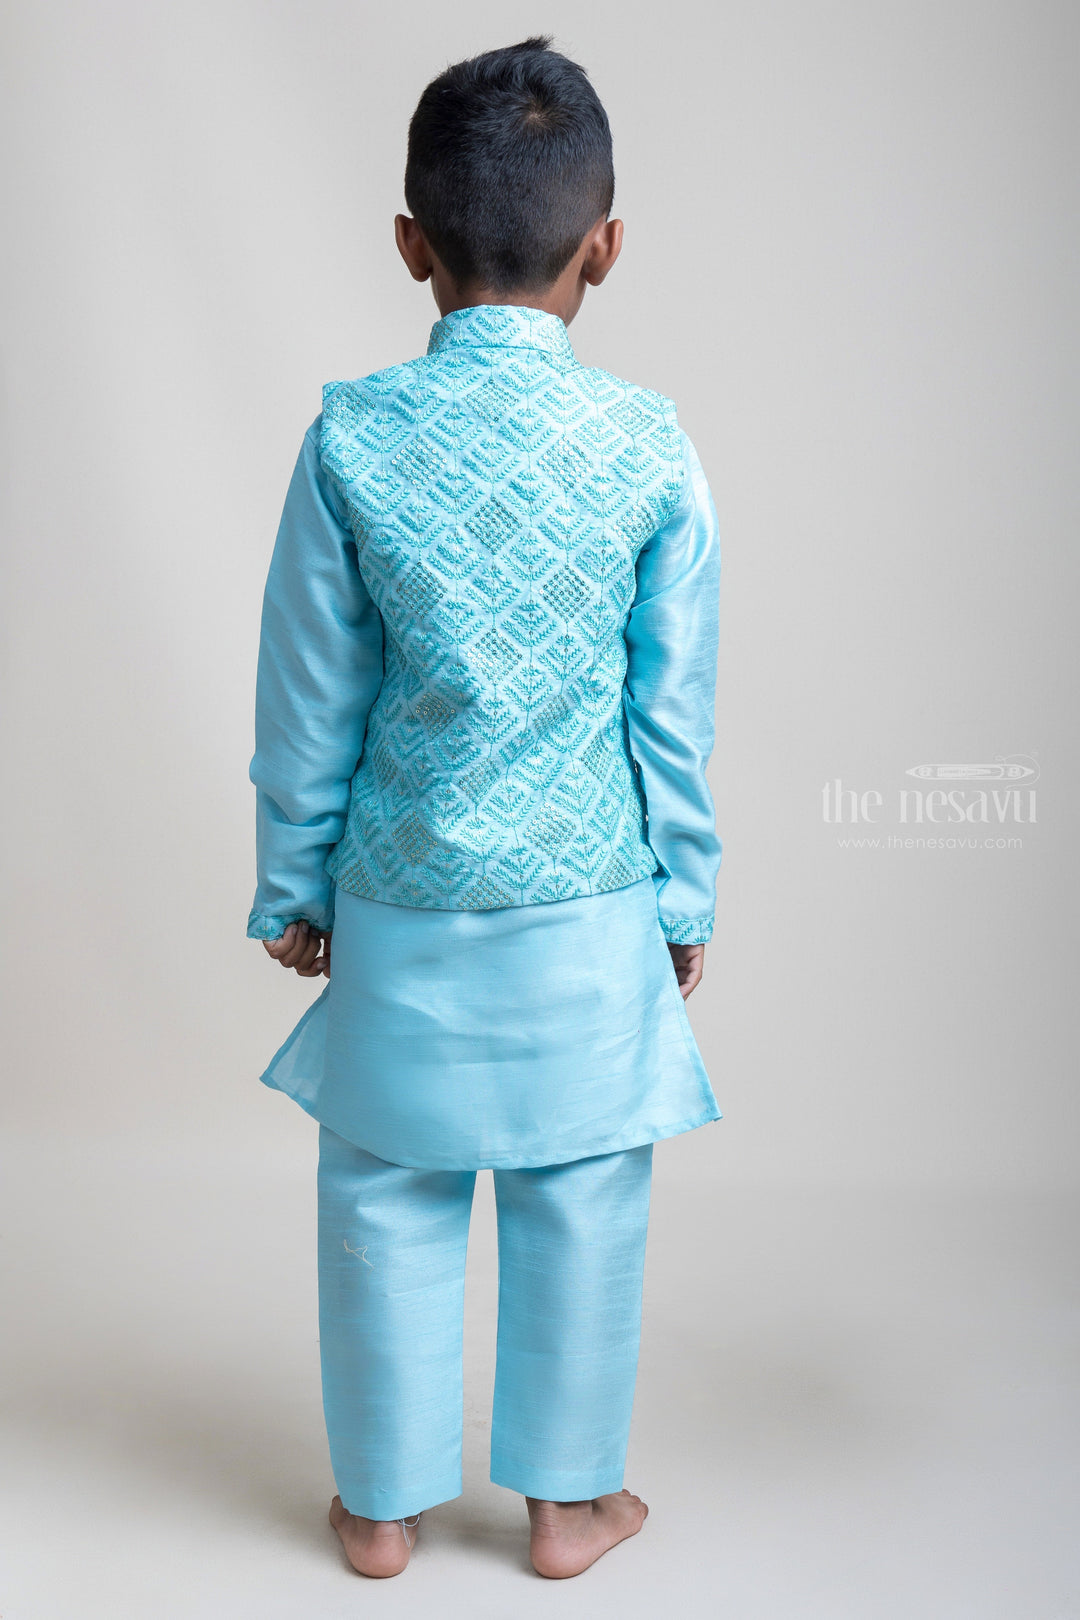 The Nesavu Boys Jacket Sets High-Profile Teal Blue Three Piece Kurta With Buttoned Overcoat For Little Boys Nesavu Festive Wear Three Piece Kurta Set For Boys| Hot Collection| The Nesavu